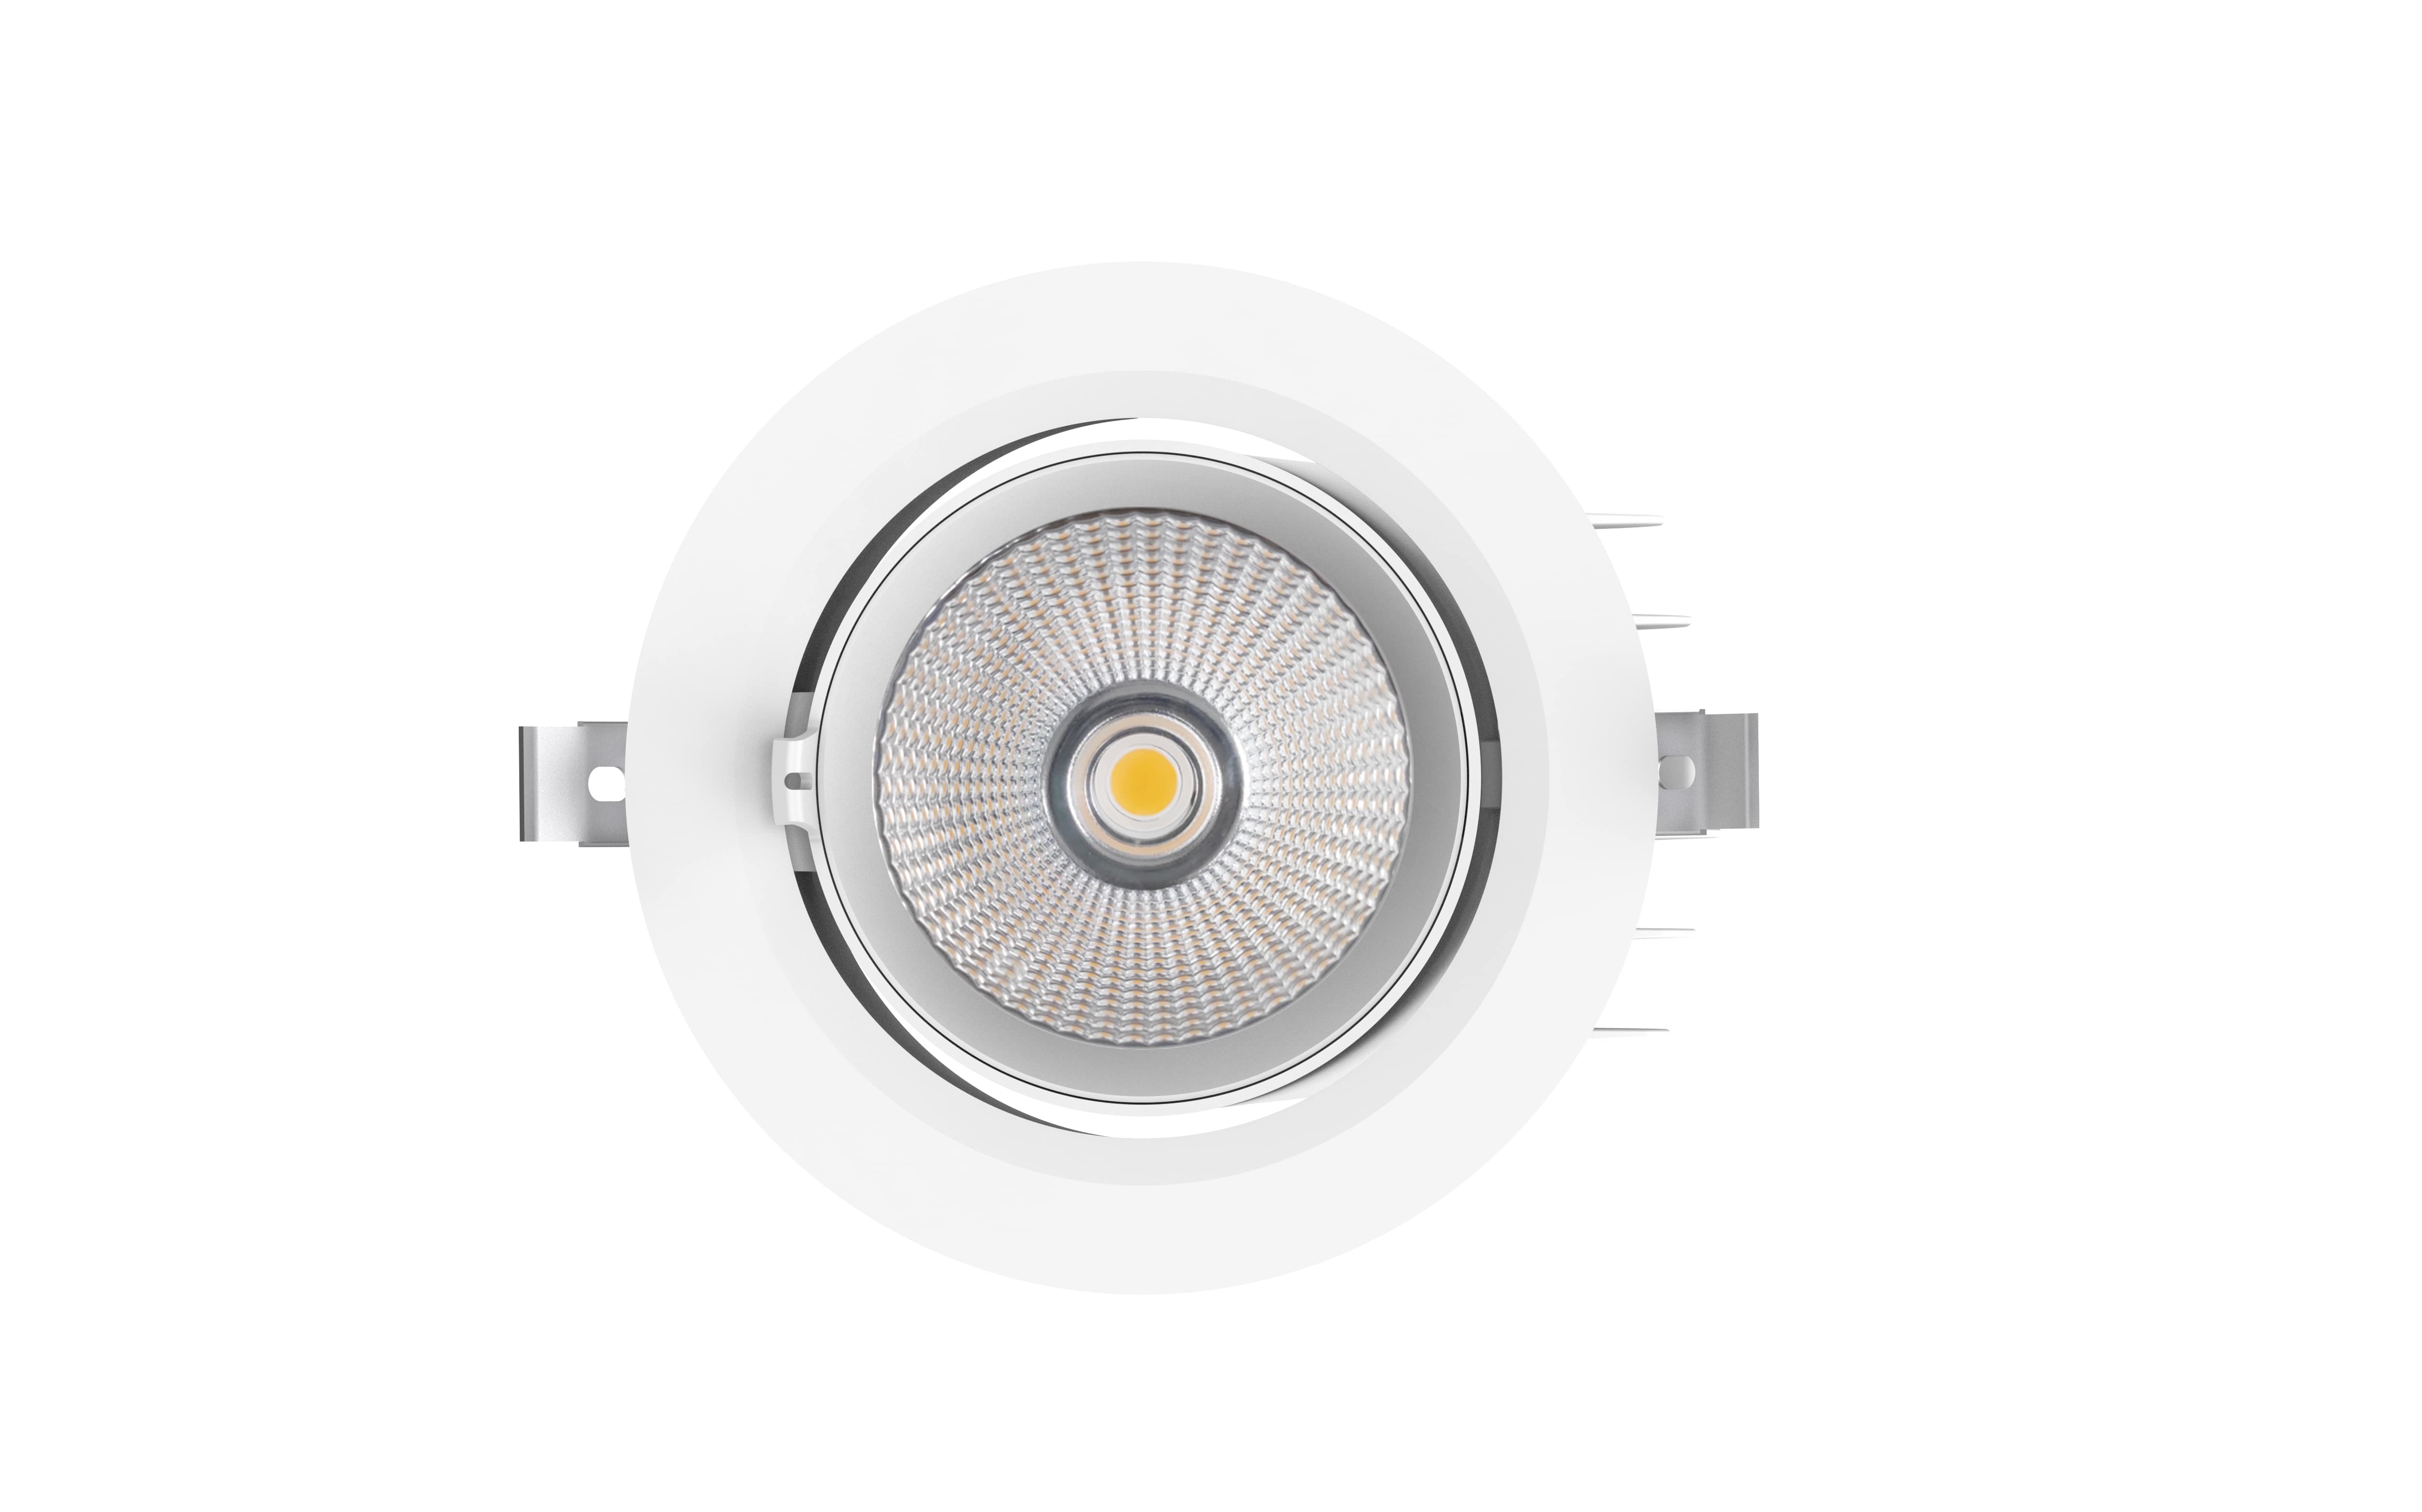 LED-Downlight MULTI 2 20-40 W, 840, 4.800 lm, 36°, PowerSwitch, 180x147 mm, Loch 165-170 mm